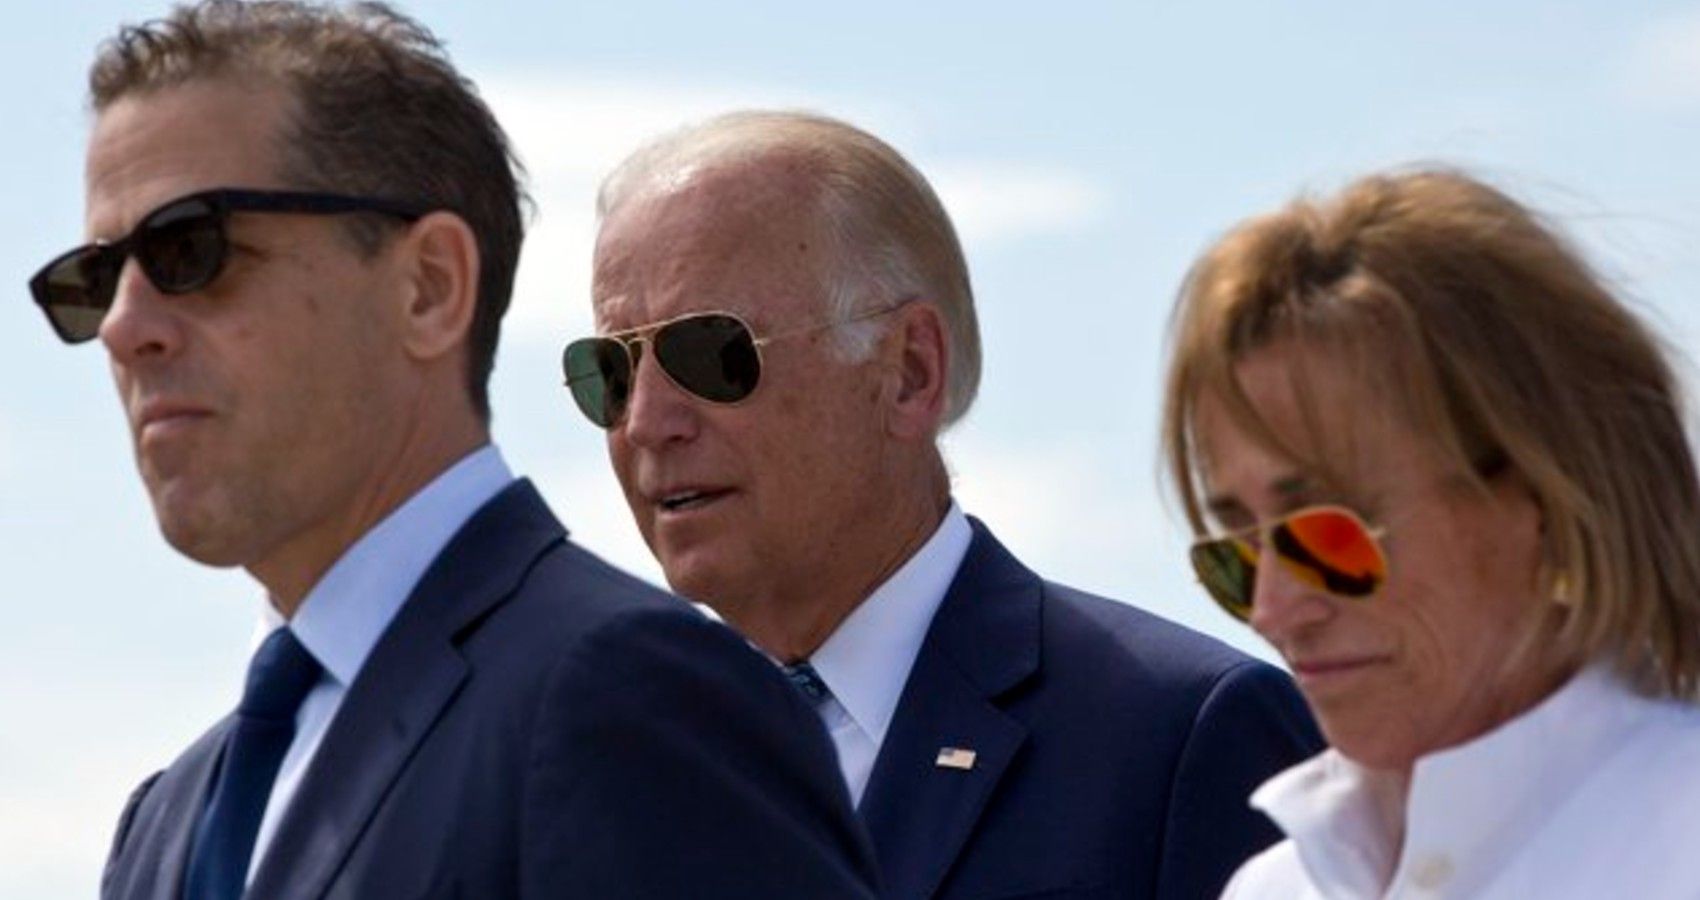 Joe Biden walking with his son and wife